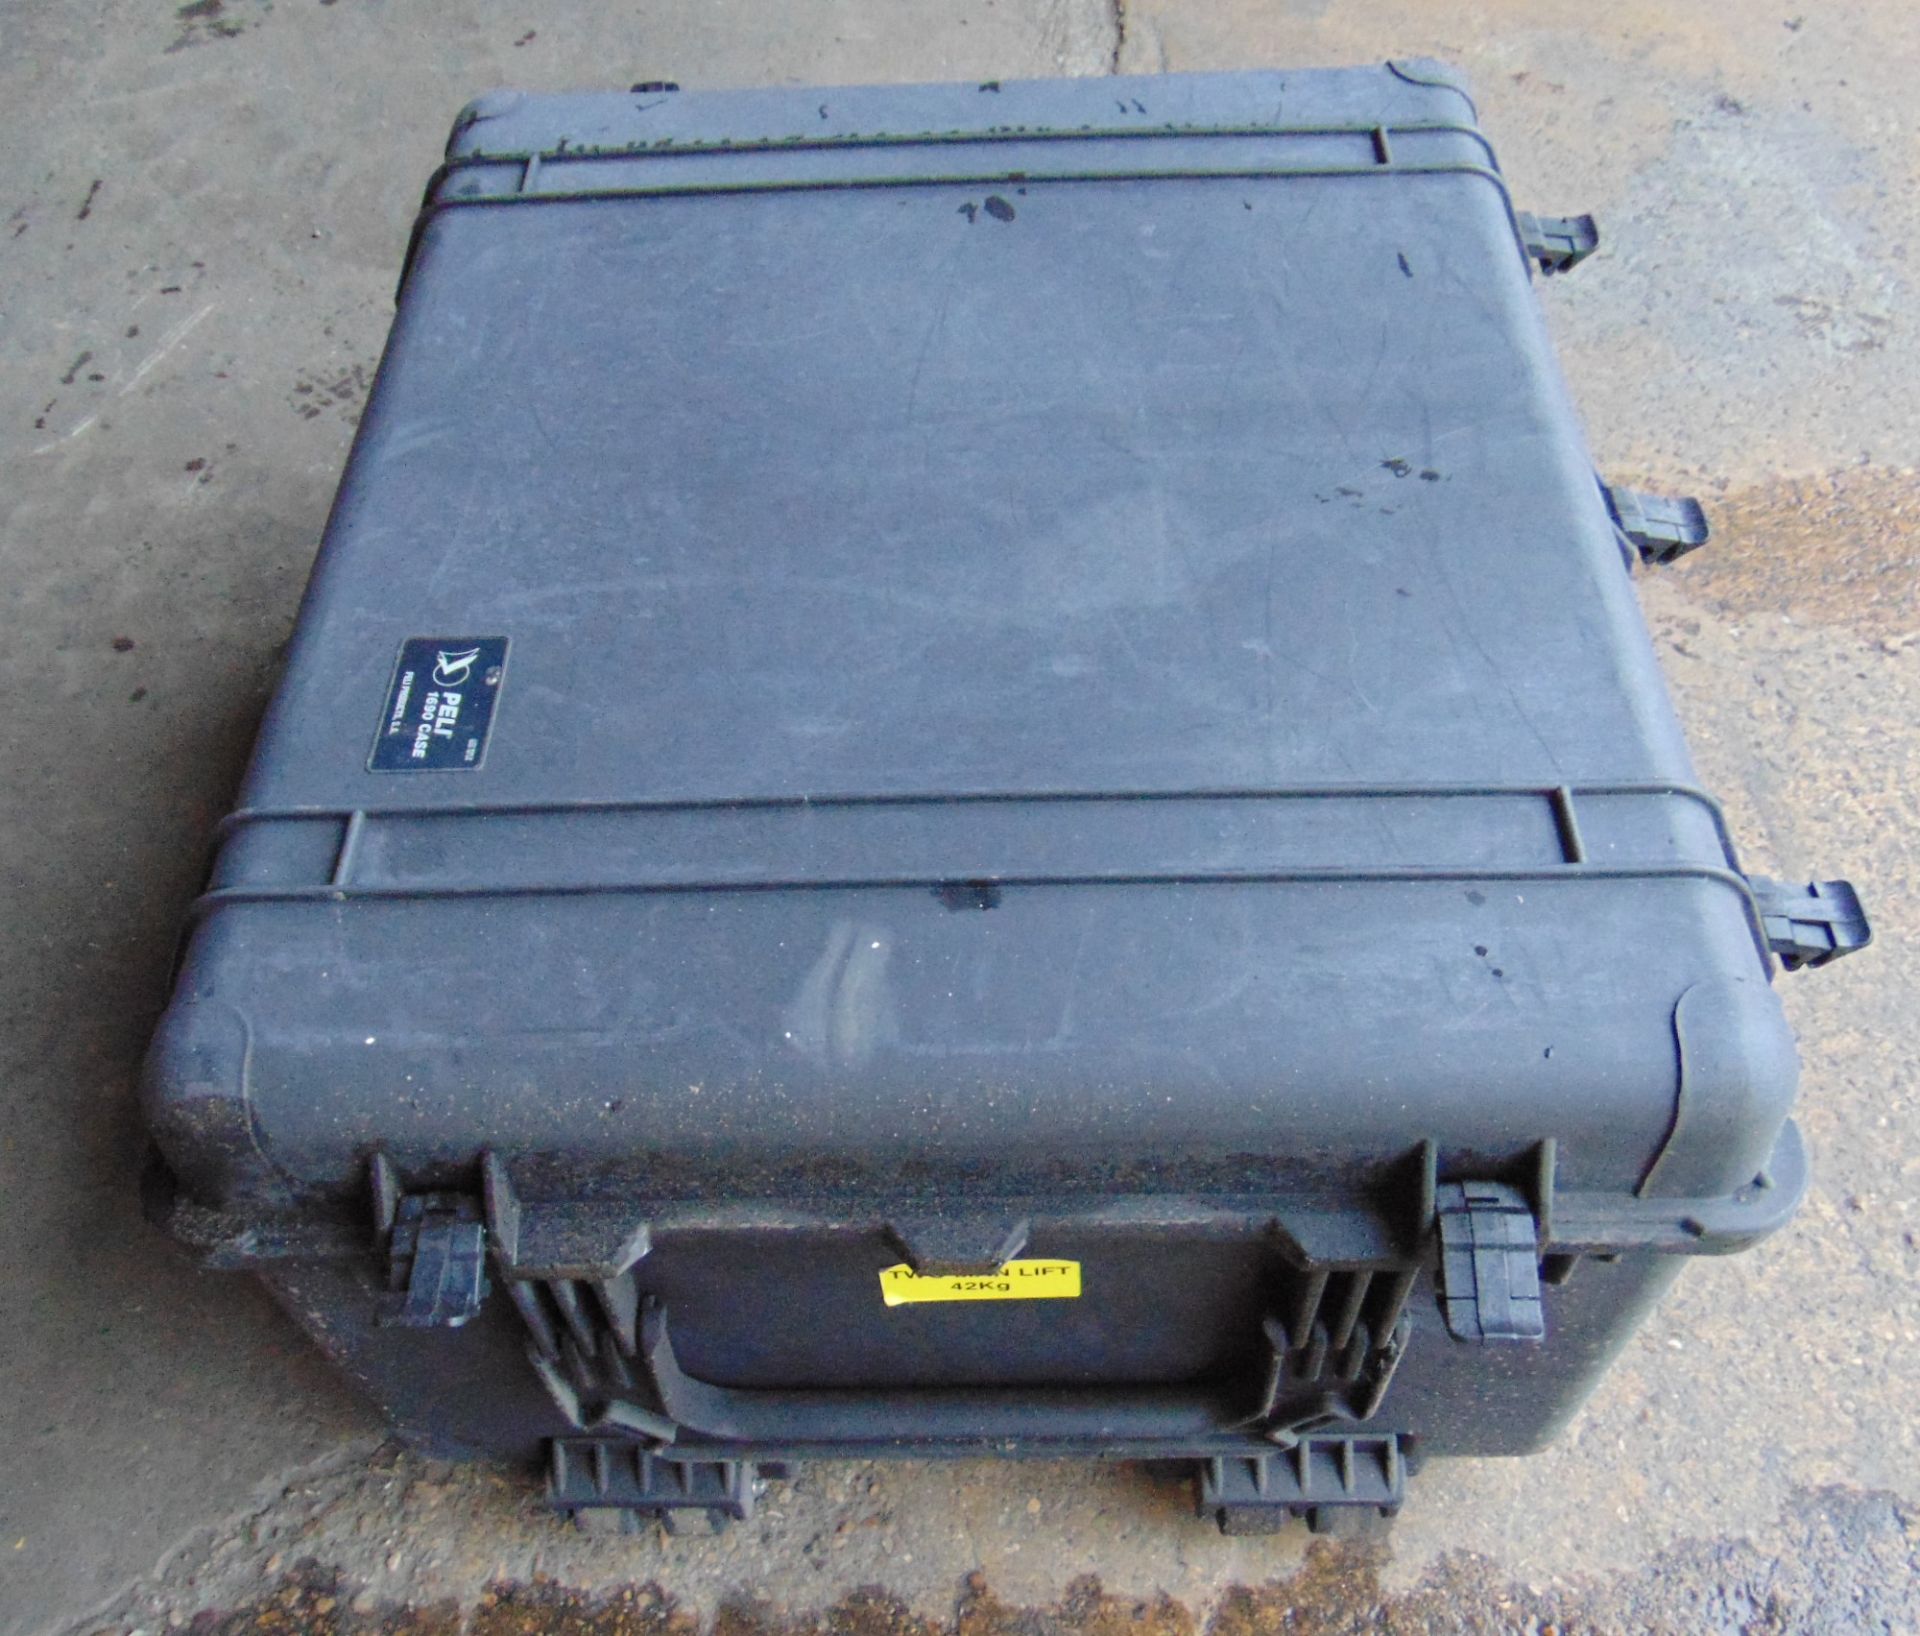 Peli 1690 Protector Transport Case - Image 7 of 20